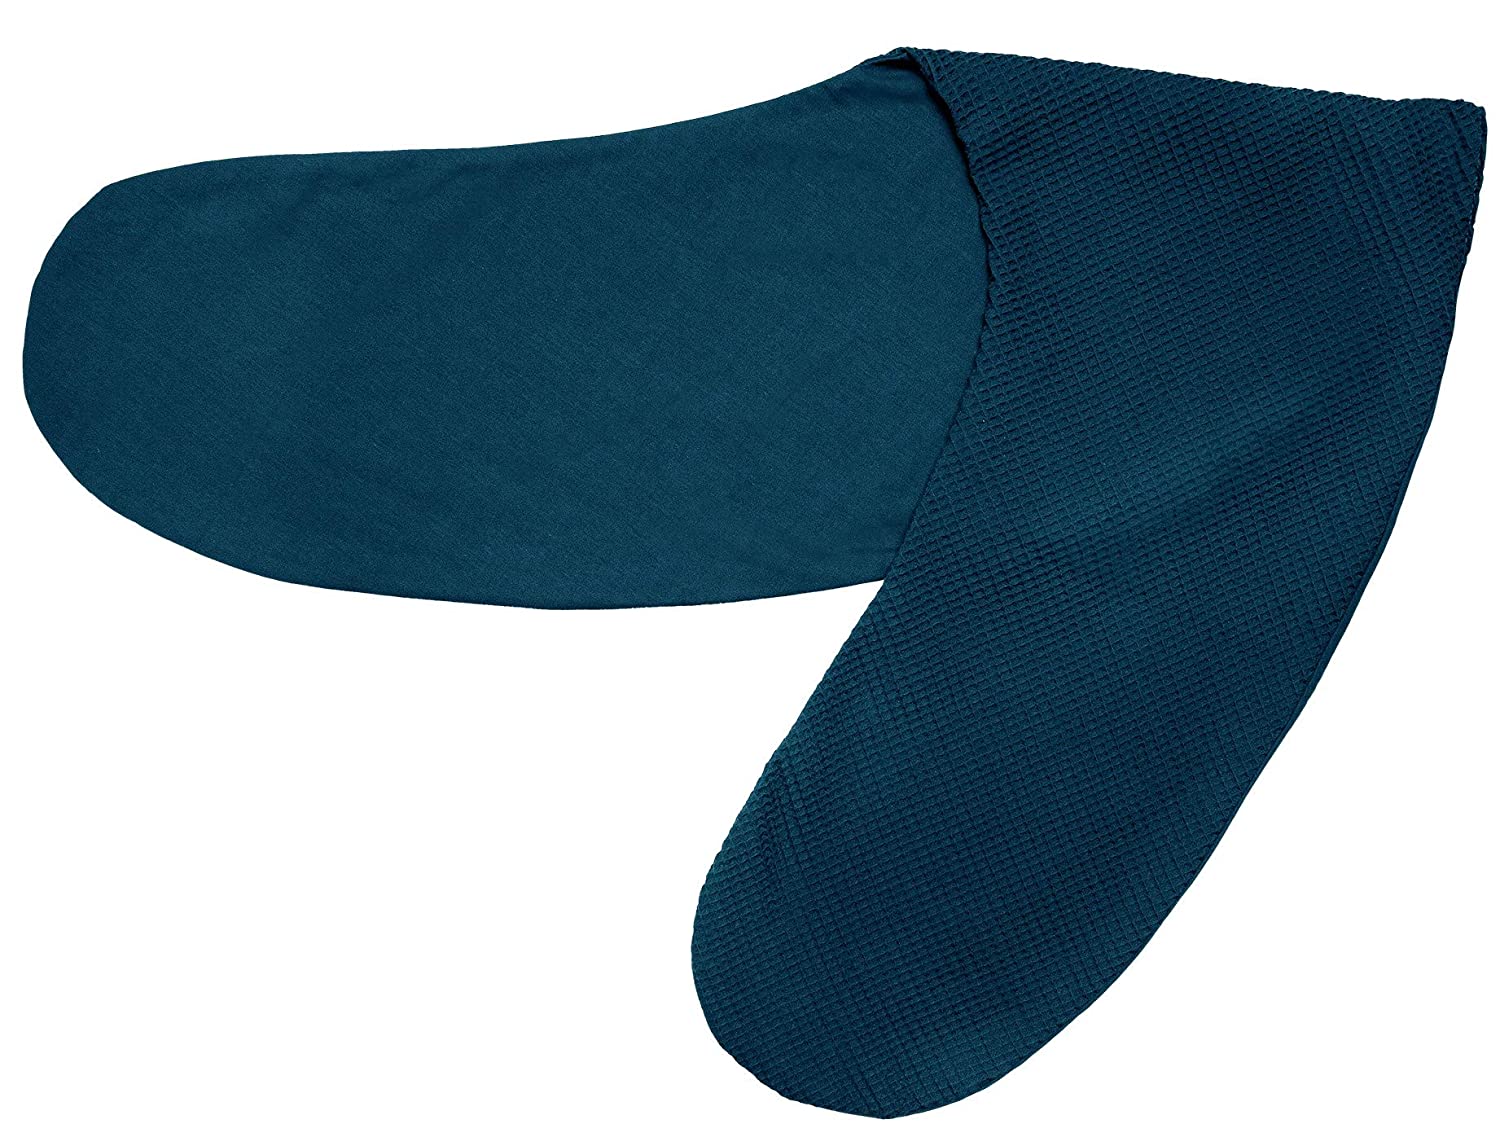 Ideenreich Ideenreich 2463 Nursing Pillow Cover 190 cm Teal / Turquoise